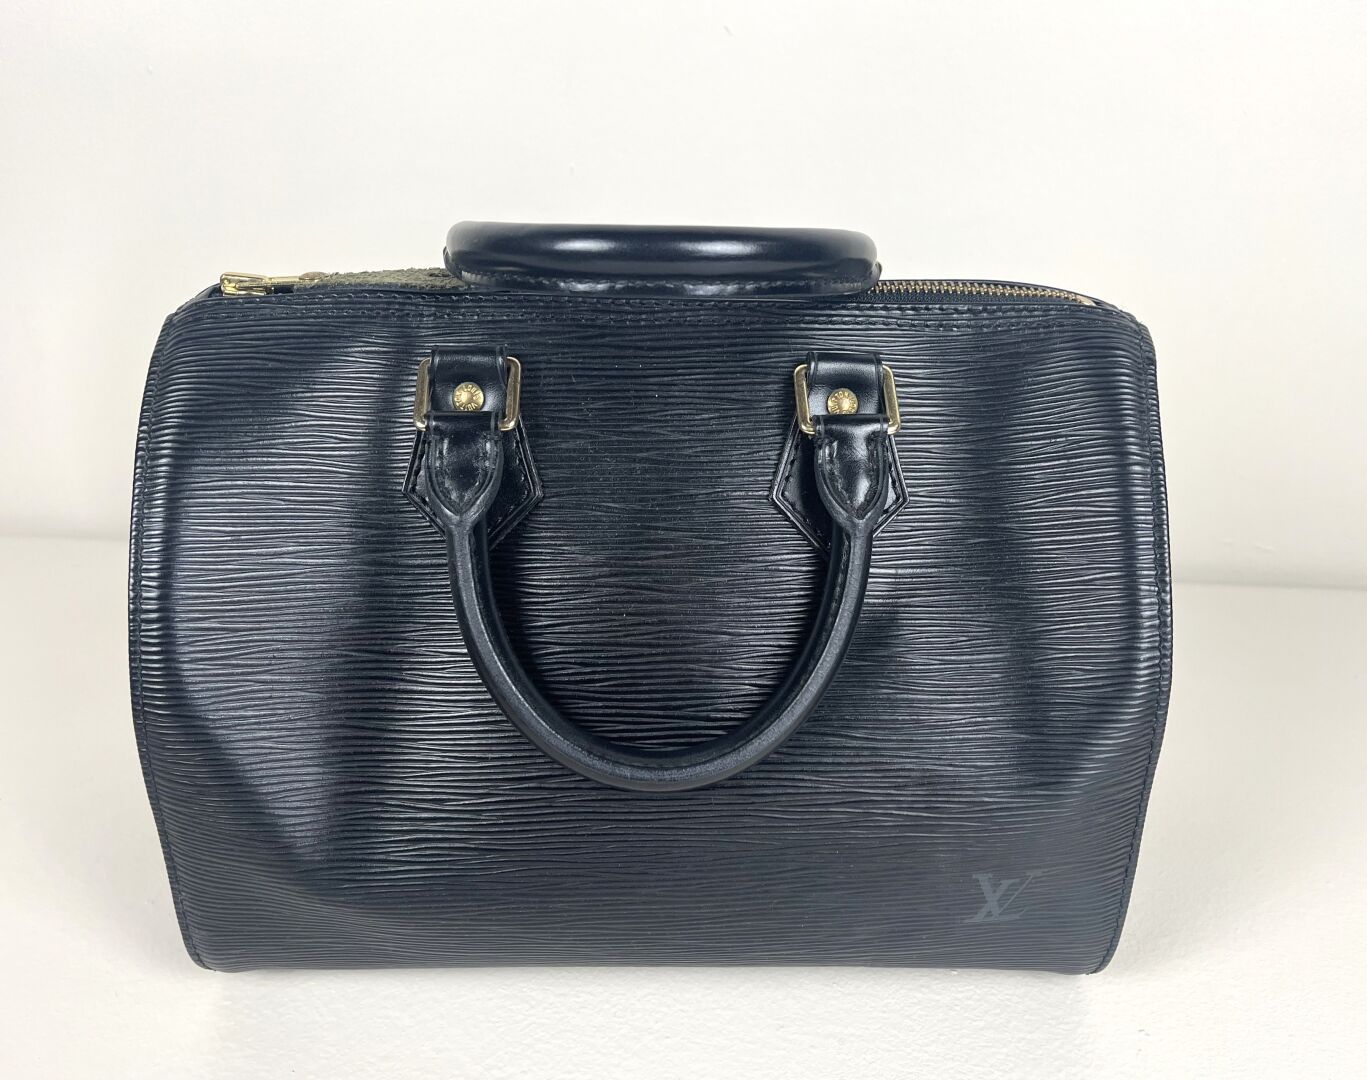 LOUIS VUITTON - Bag model Speedy 28 in black epi leath…